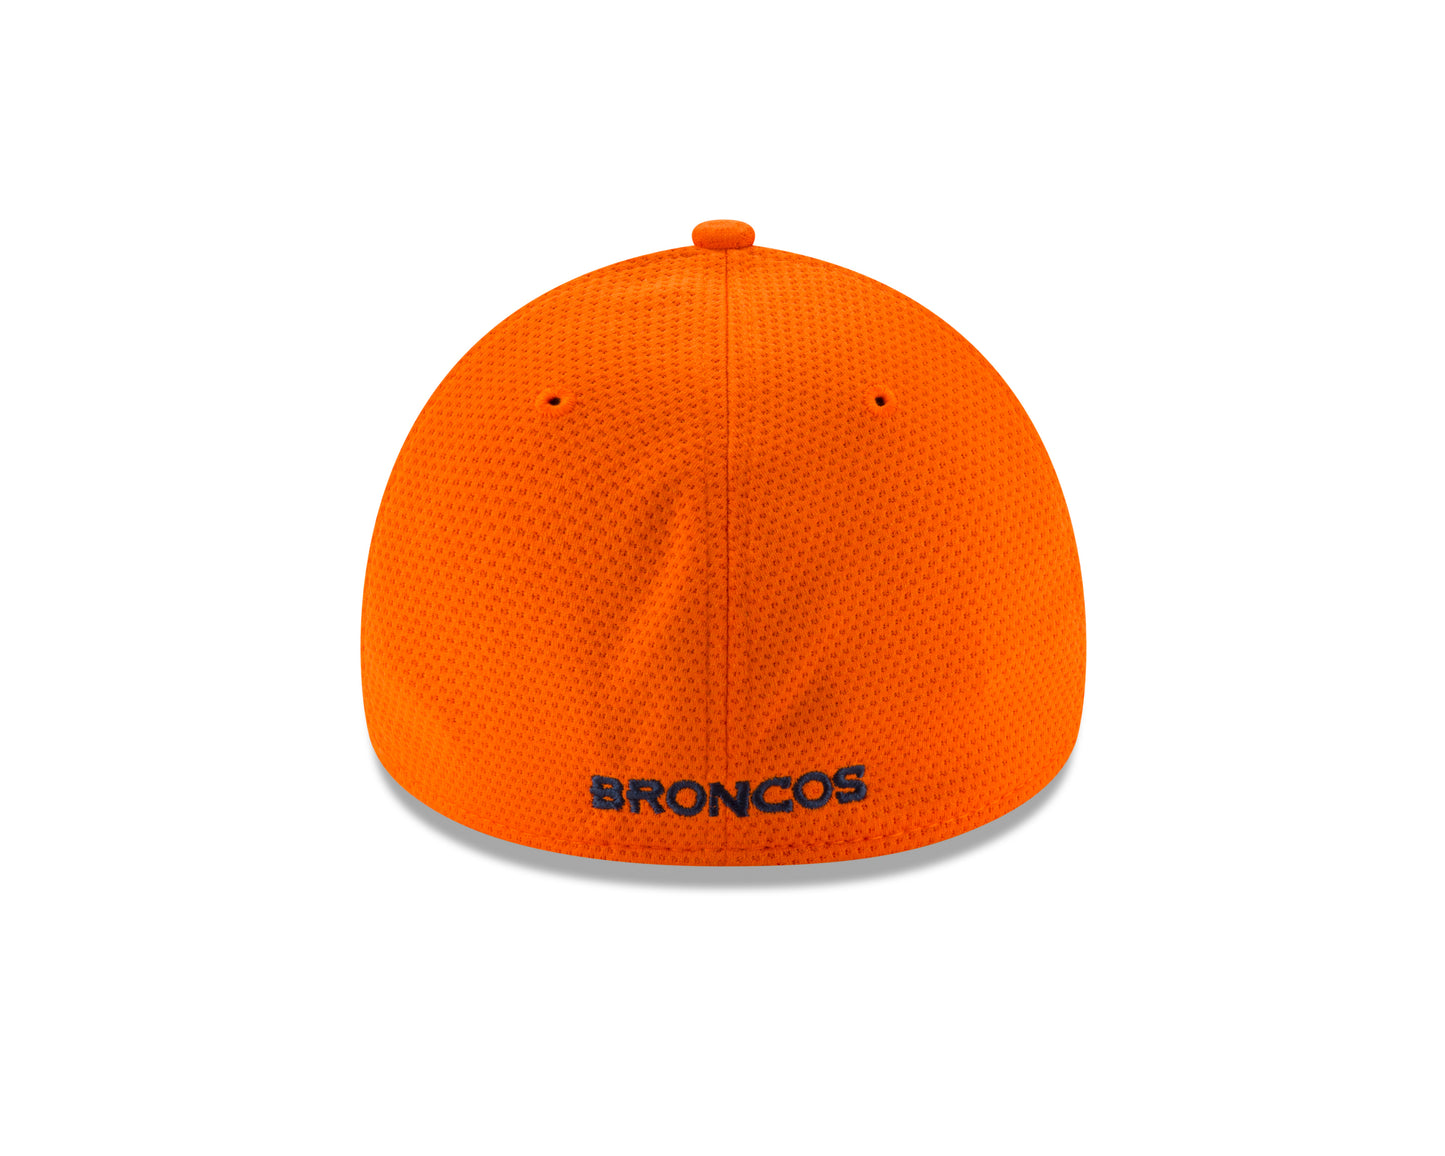 Denver Broncos New Era Shadowed Team 39THIRTY Flex Hat - Orange